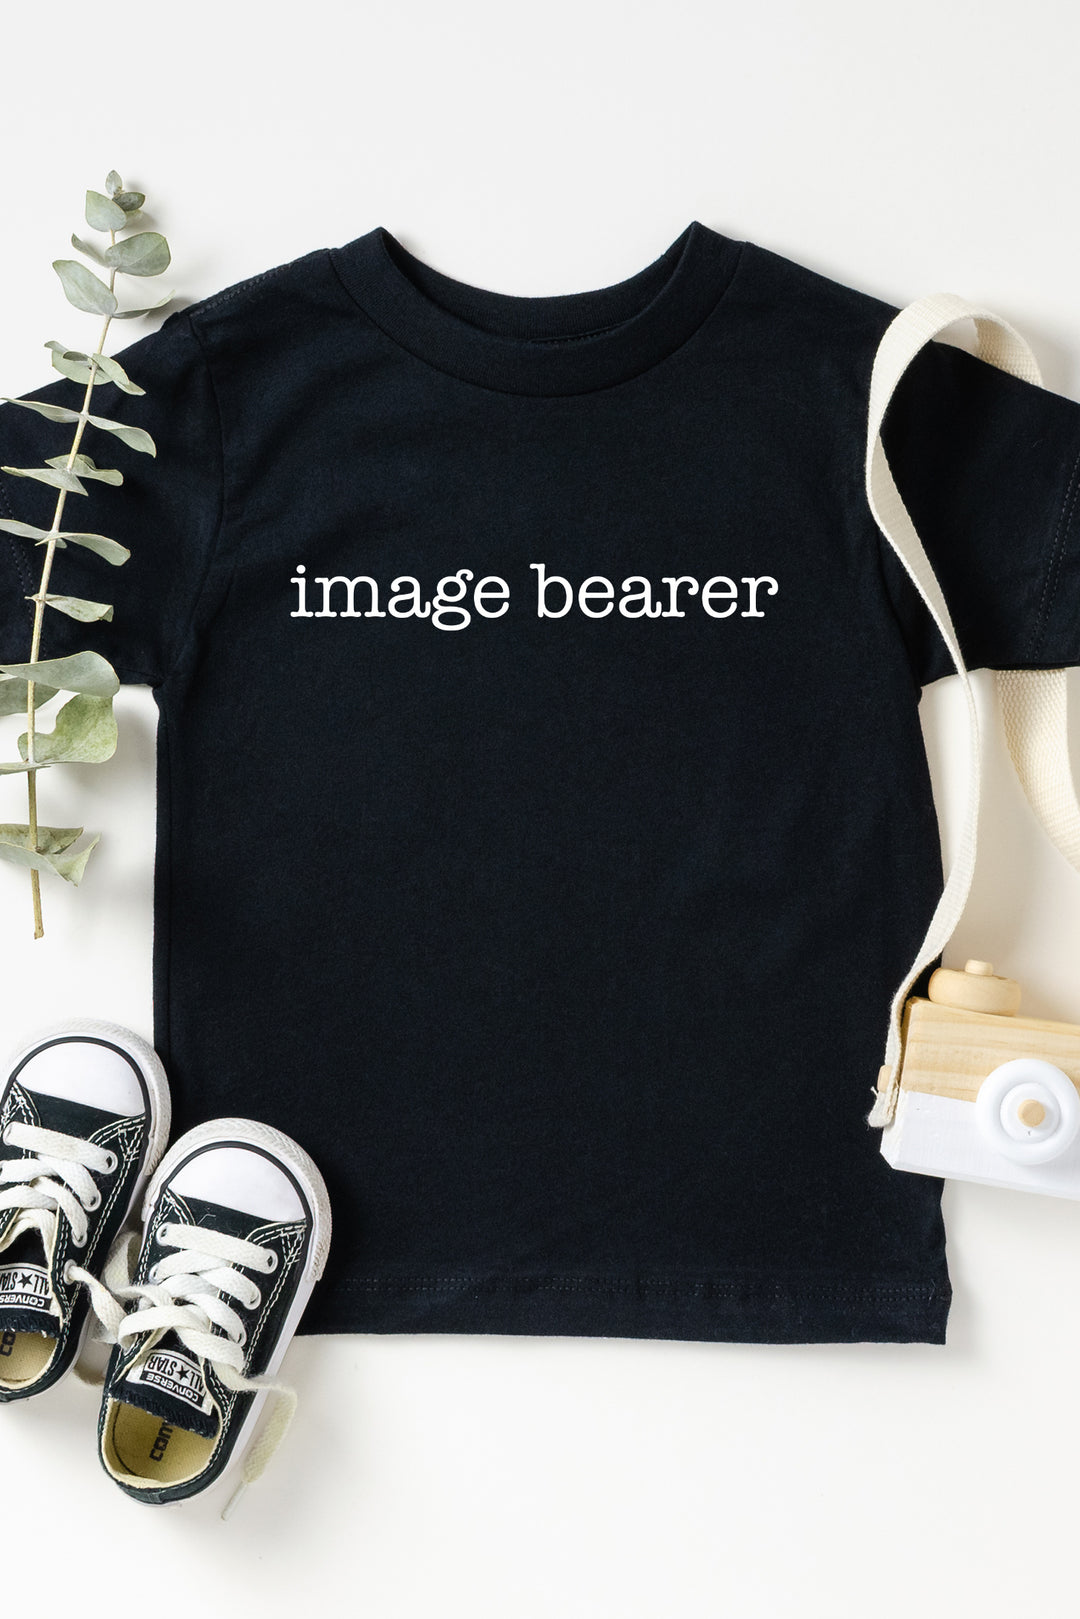 Imagine Bearer Baby Tee, Print